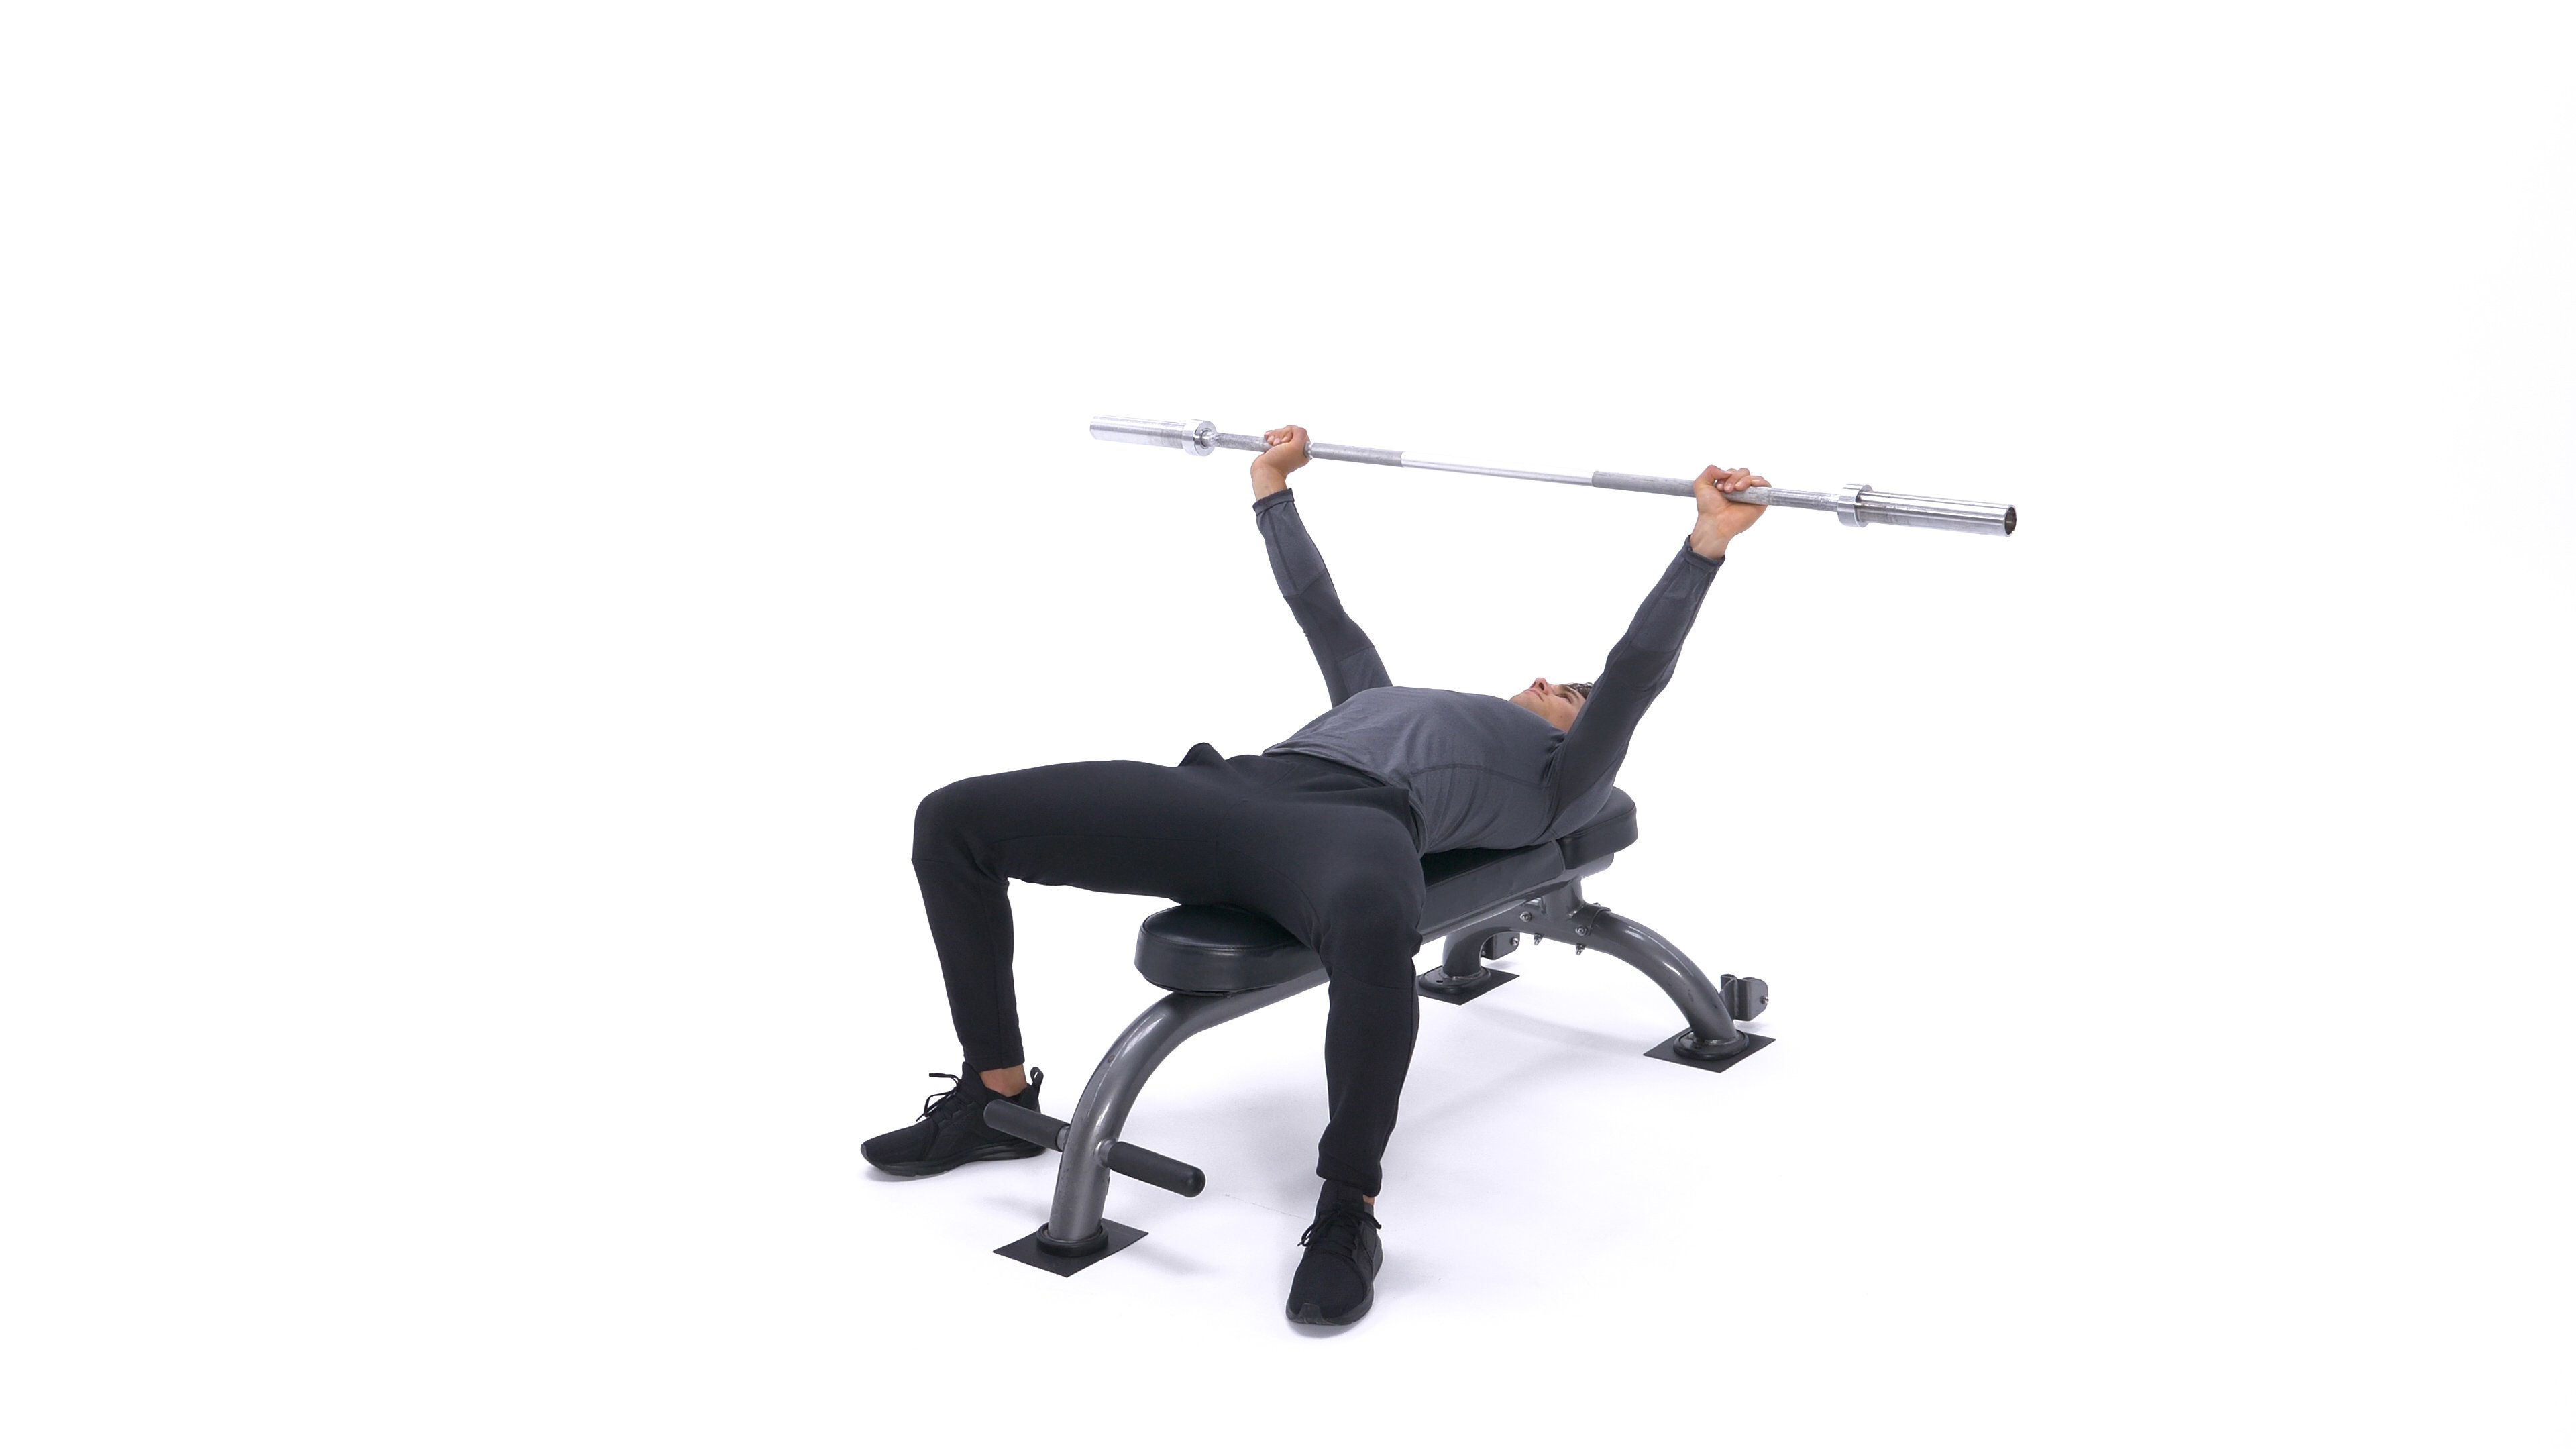 Wide-grip bench press | Exercise Videos & Guides | Bodybuilding.com